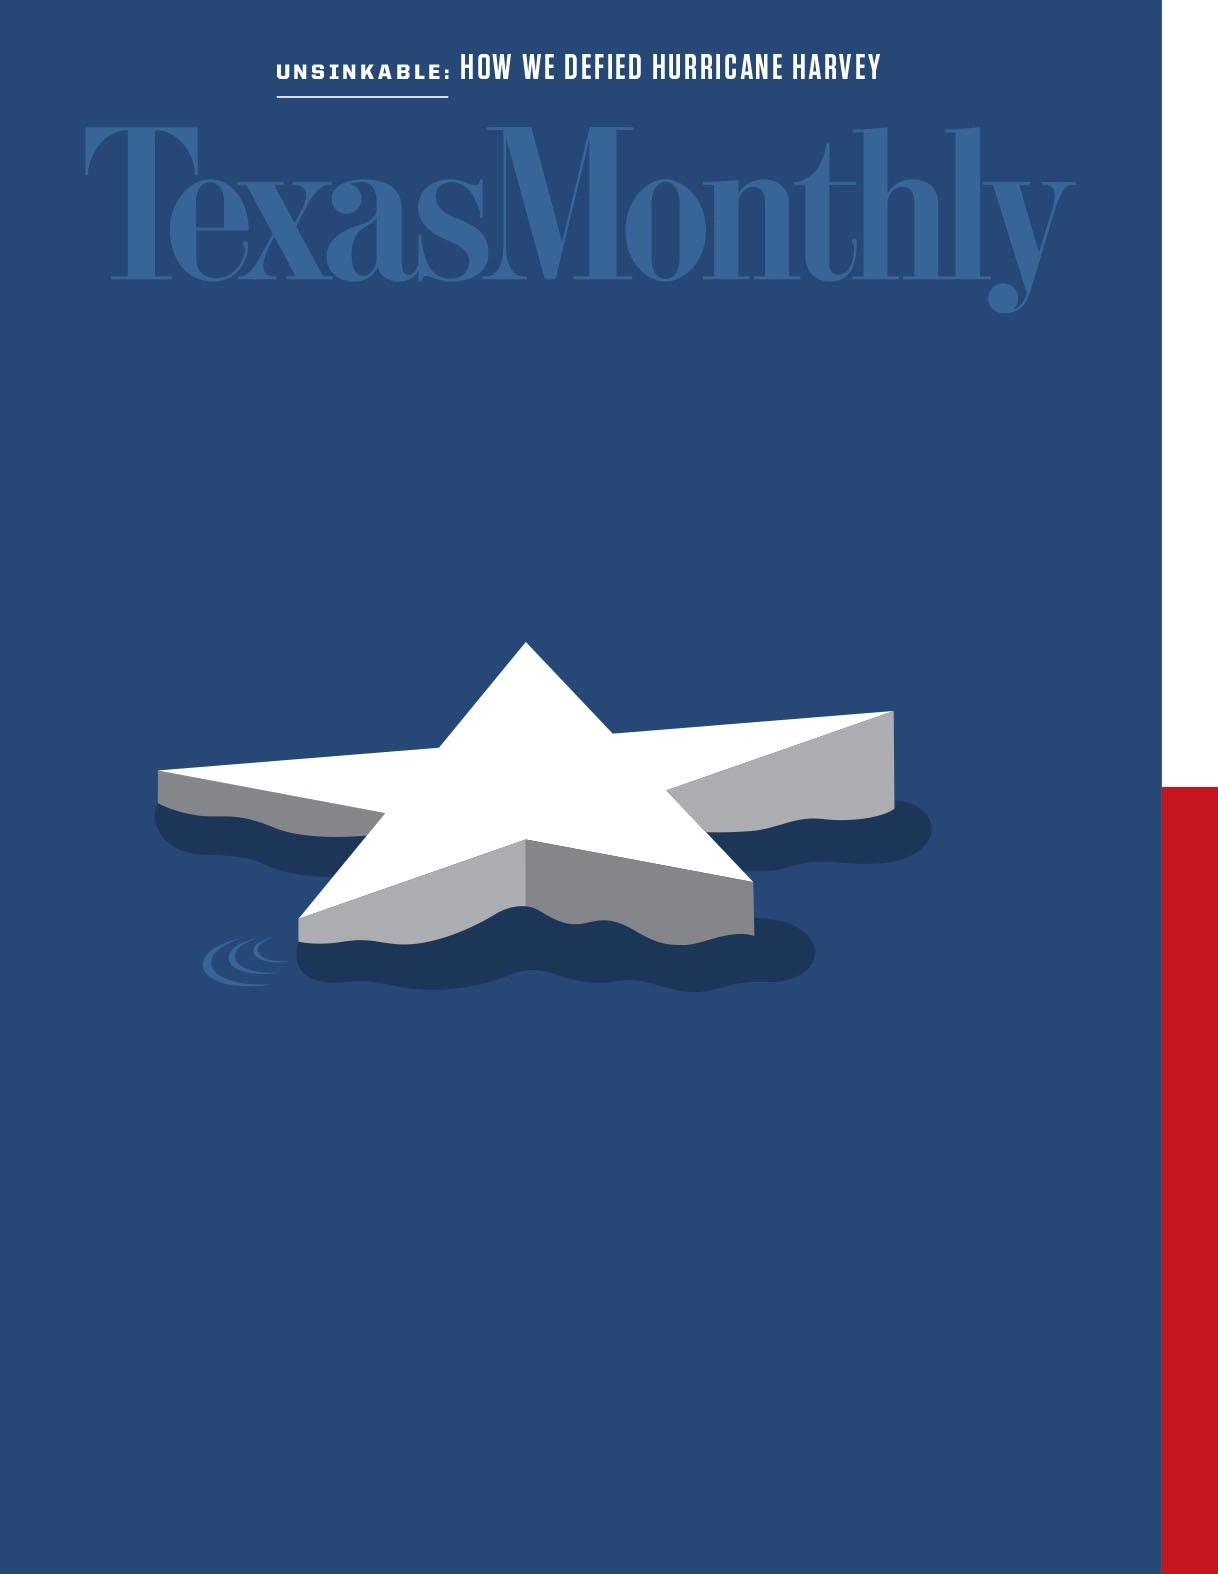 Texas Monthly - "Unsinkable: How We Defied Hurricane Harvey," October 2017